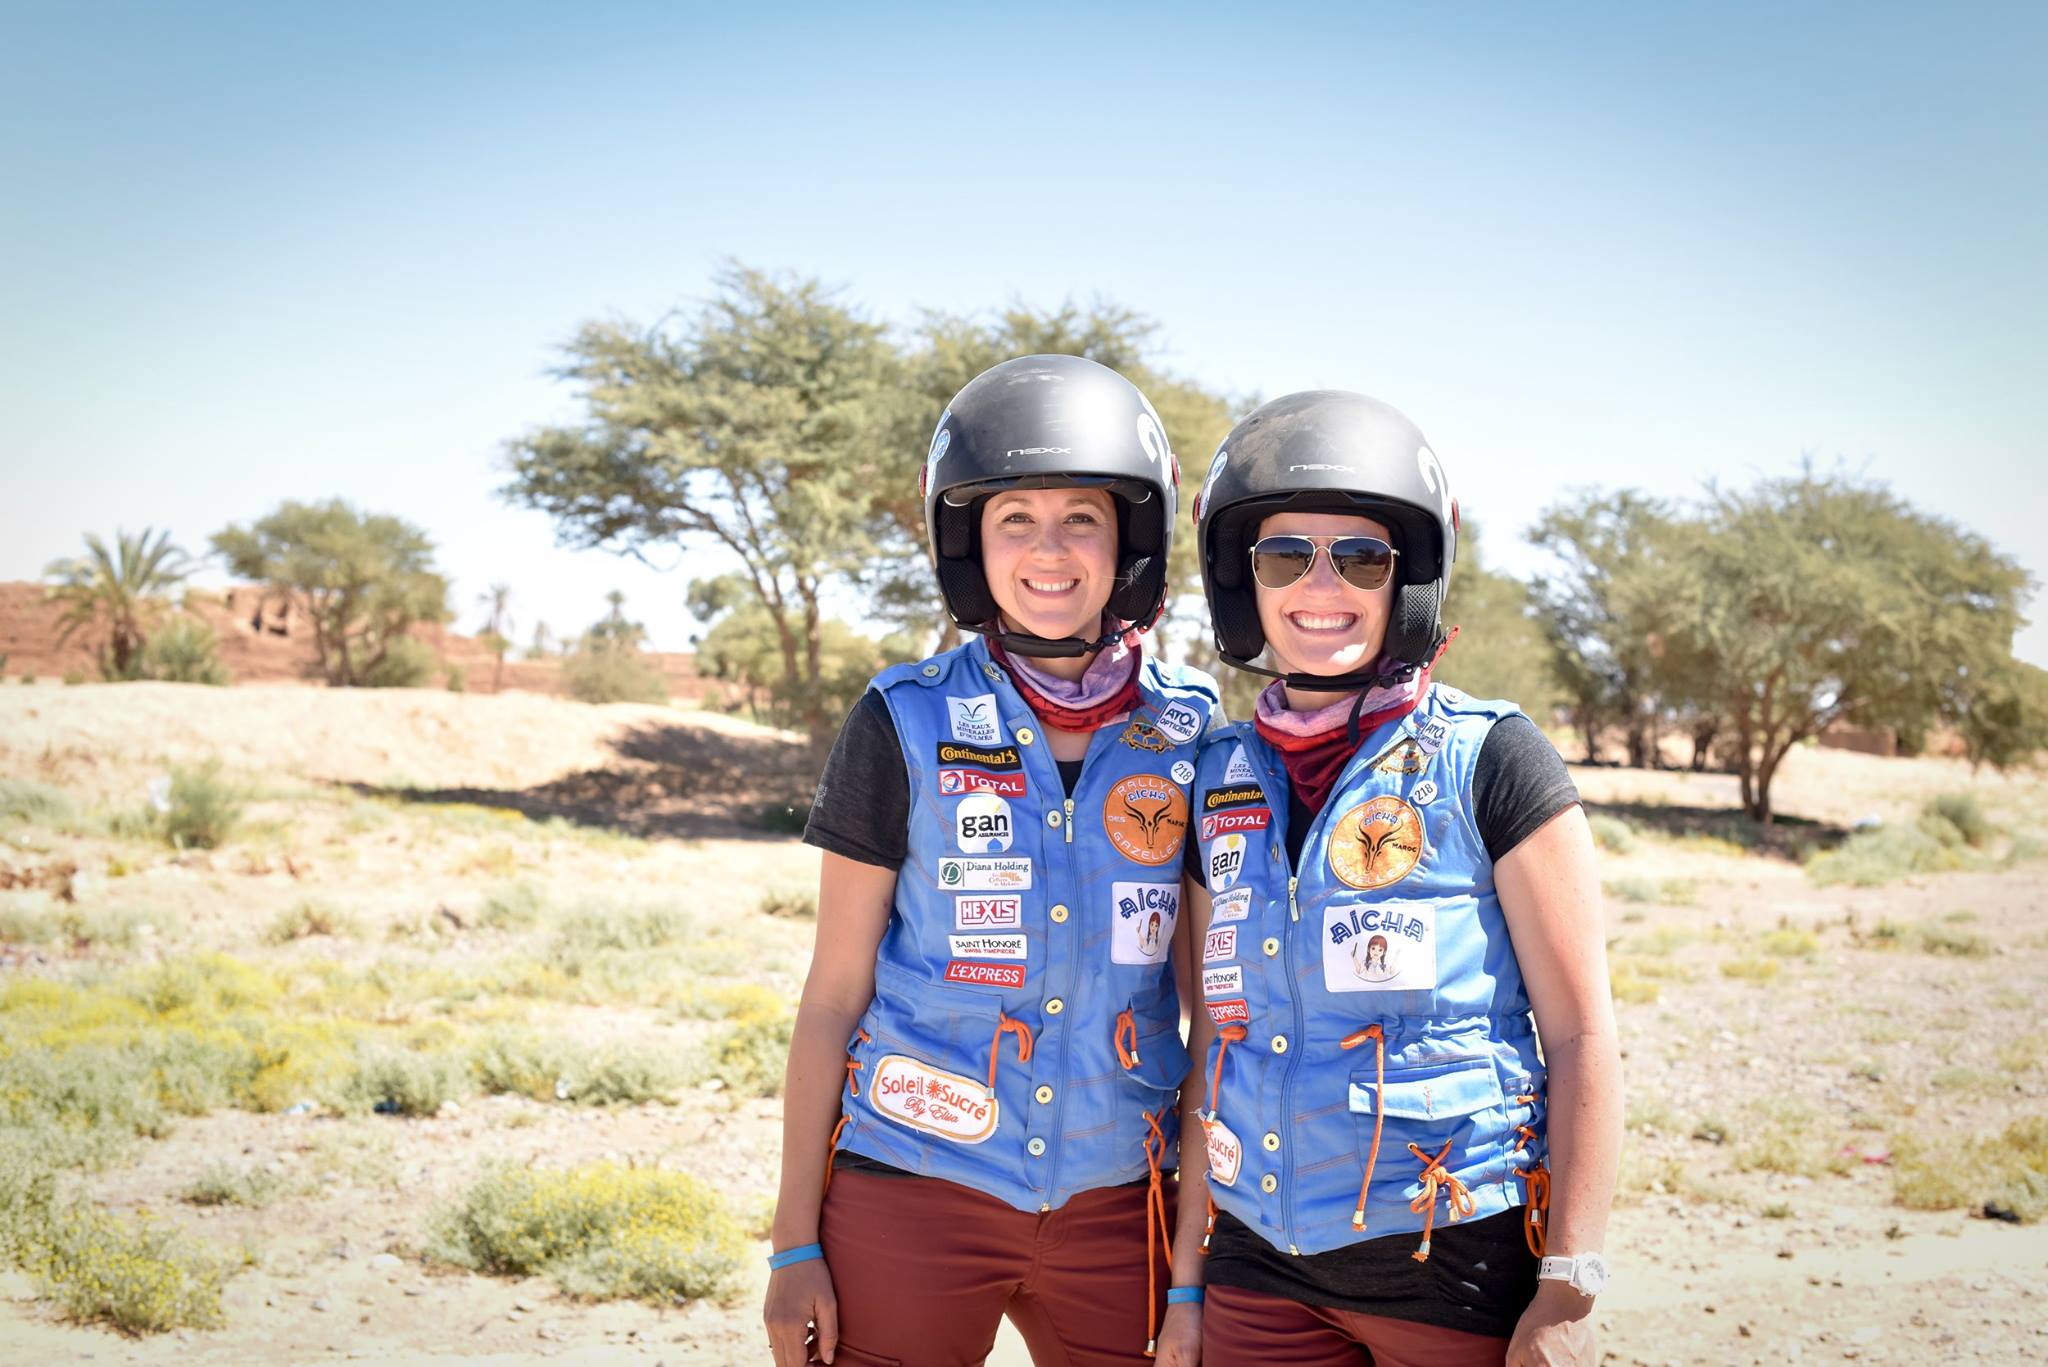 Rhonda Cahill and Rachelle Croft clad in their Team USA Rallye gear. overlanding